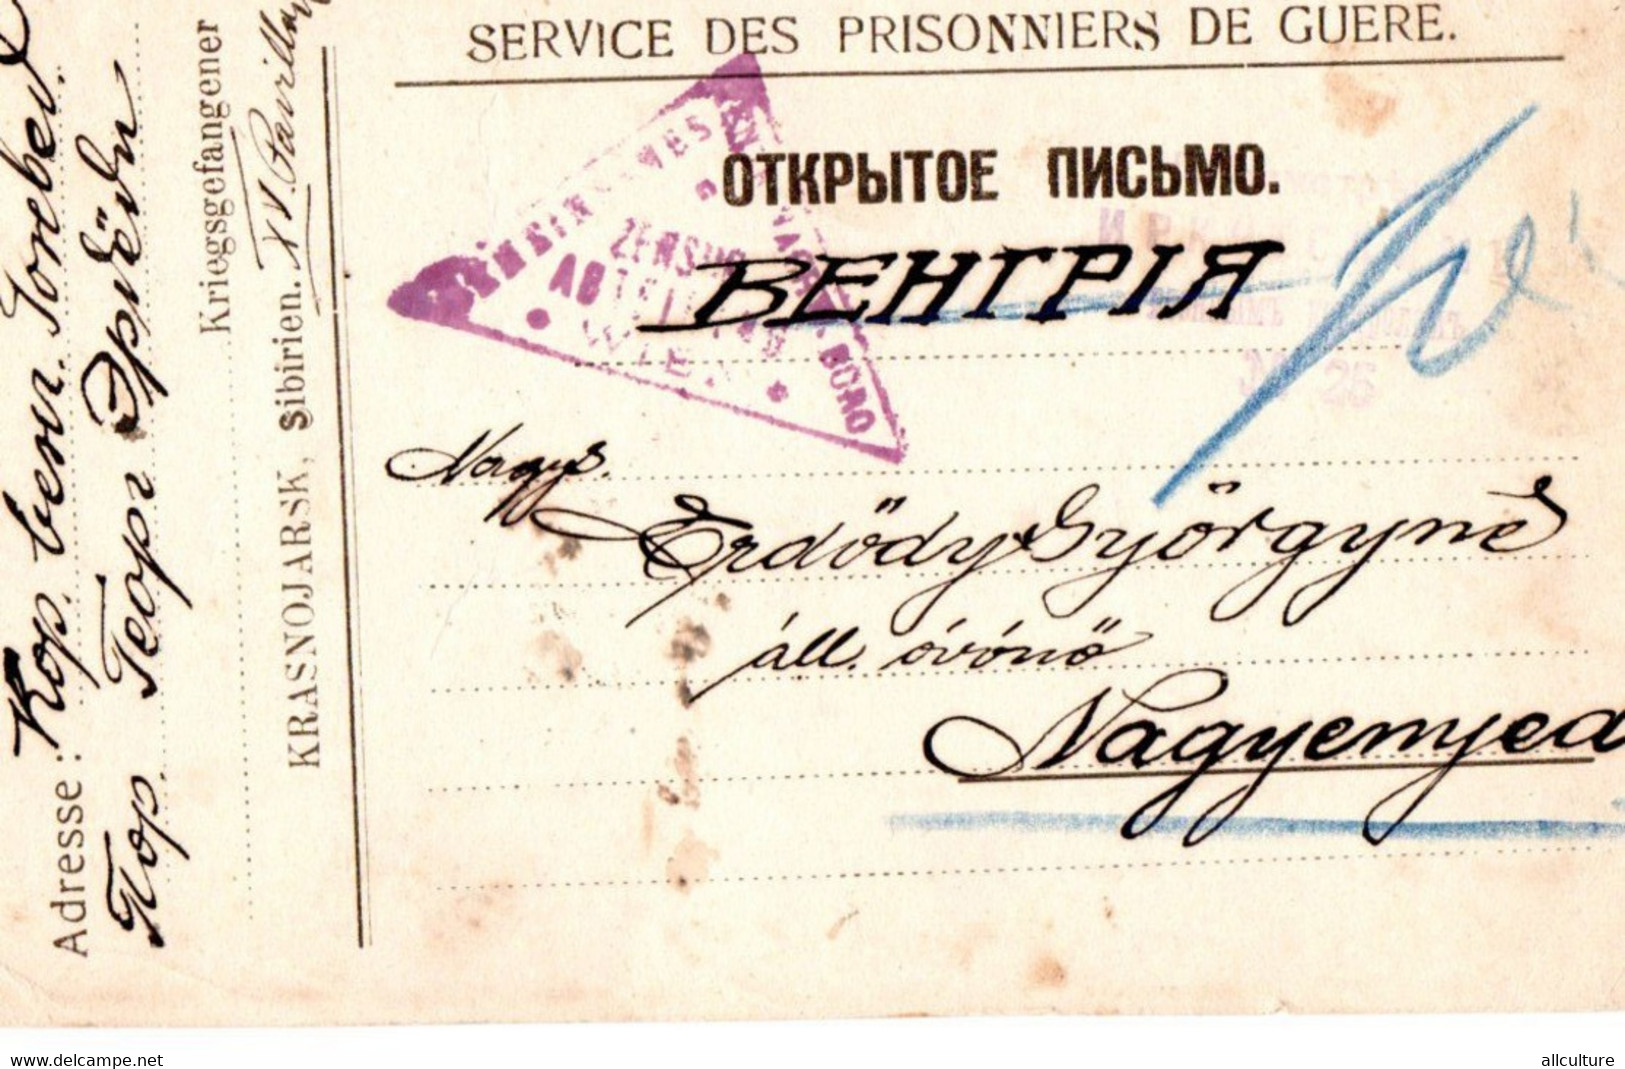 A101 - PRISONNIERS DE GUERE ,SIBERIA , KARASONJARKS SIBIRIEN,RUSSIA 1WW , PRISONS TO AIUD / NAGYEMYED ROMANIA - World War 1 Letters